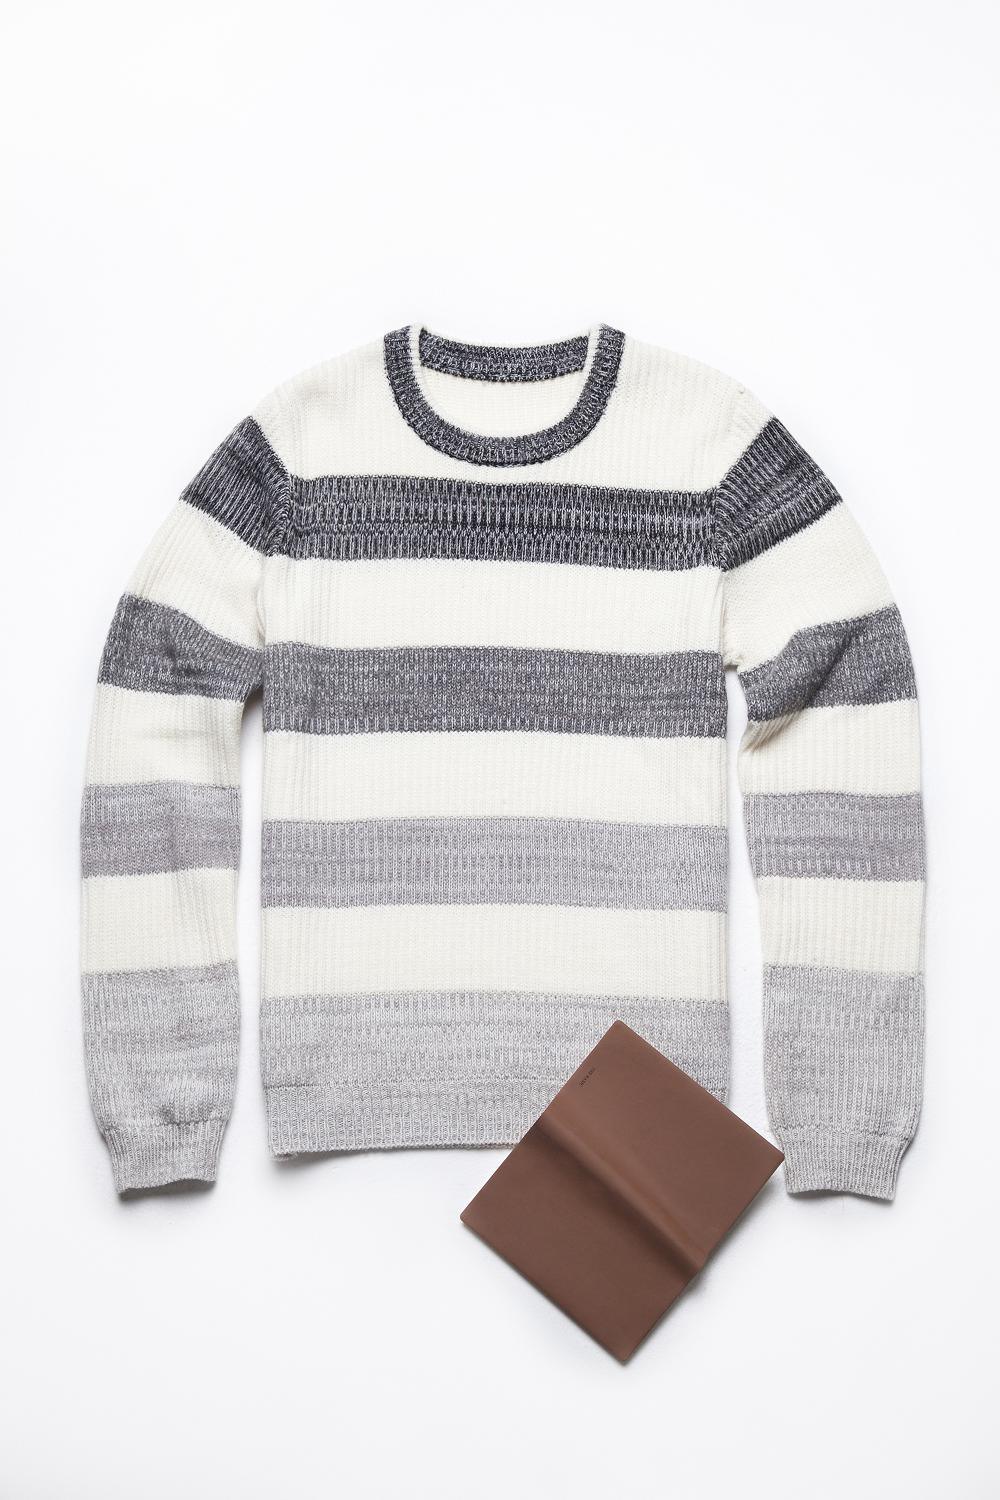 Manufactory Long Sleeve Soft Knitting Men Sweater